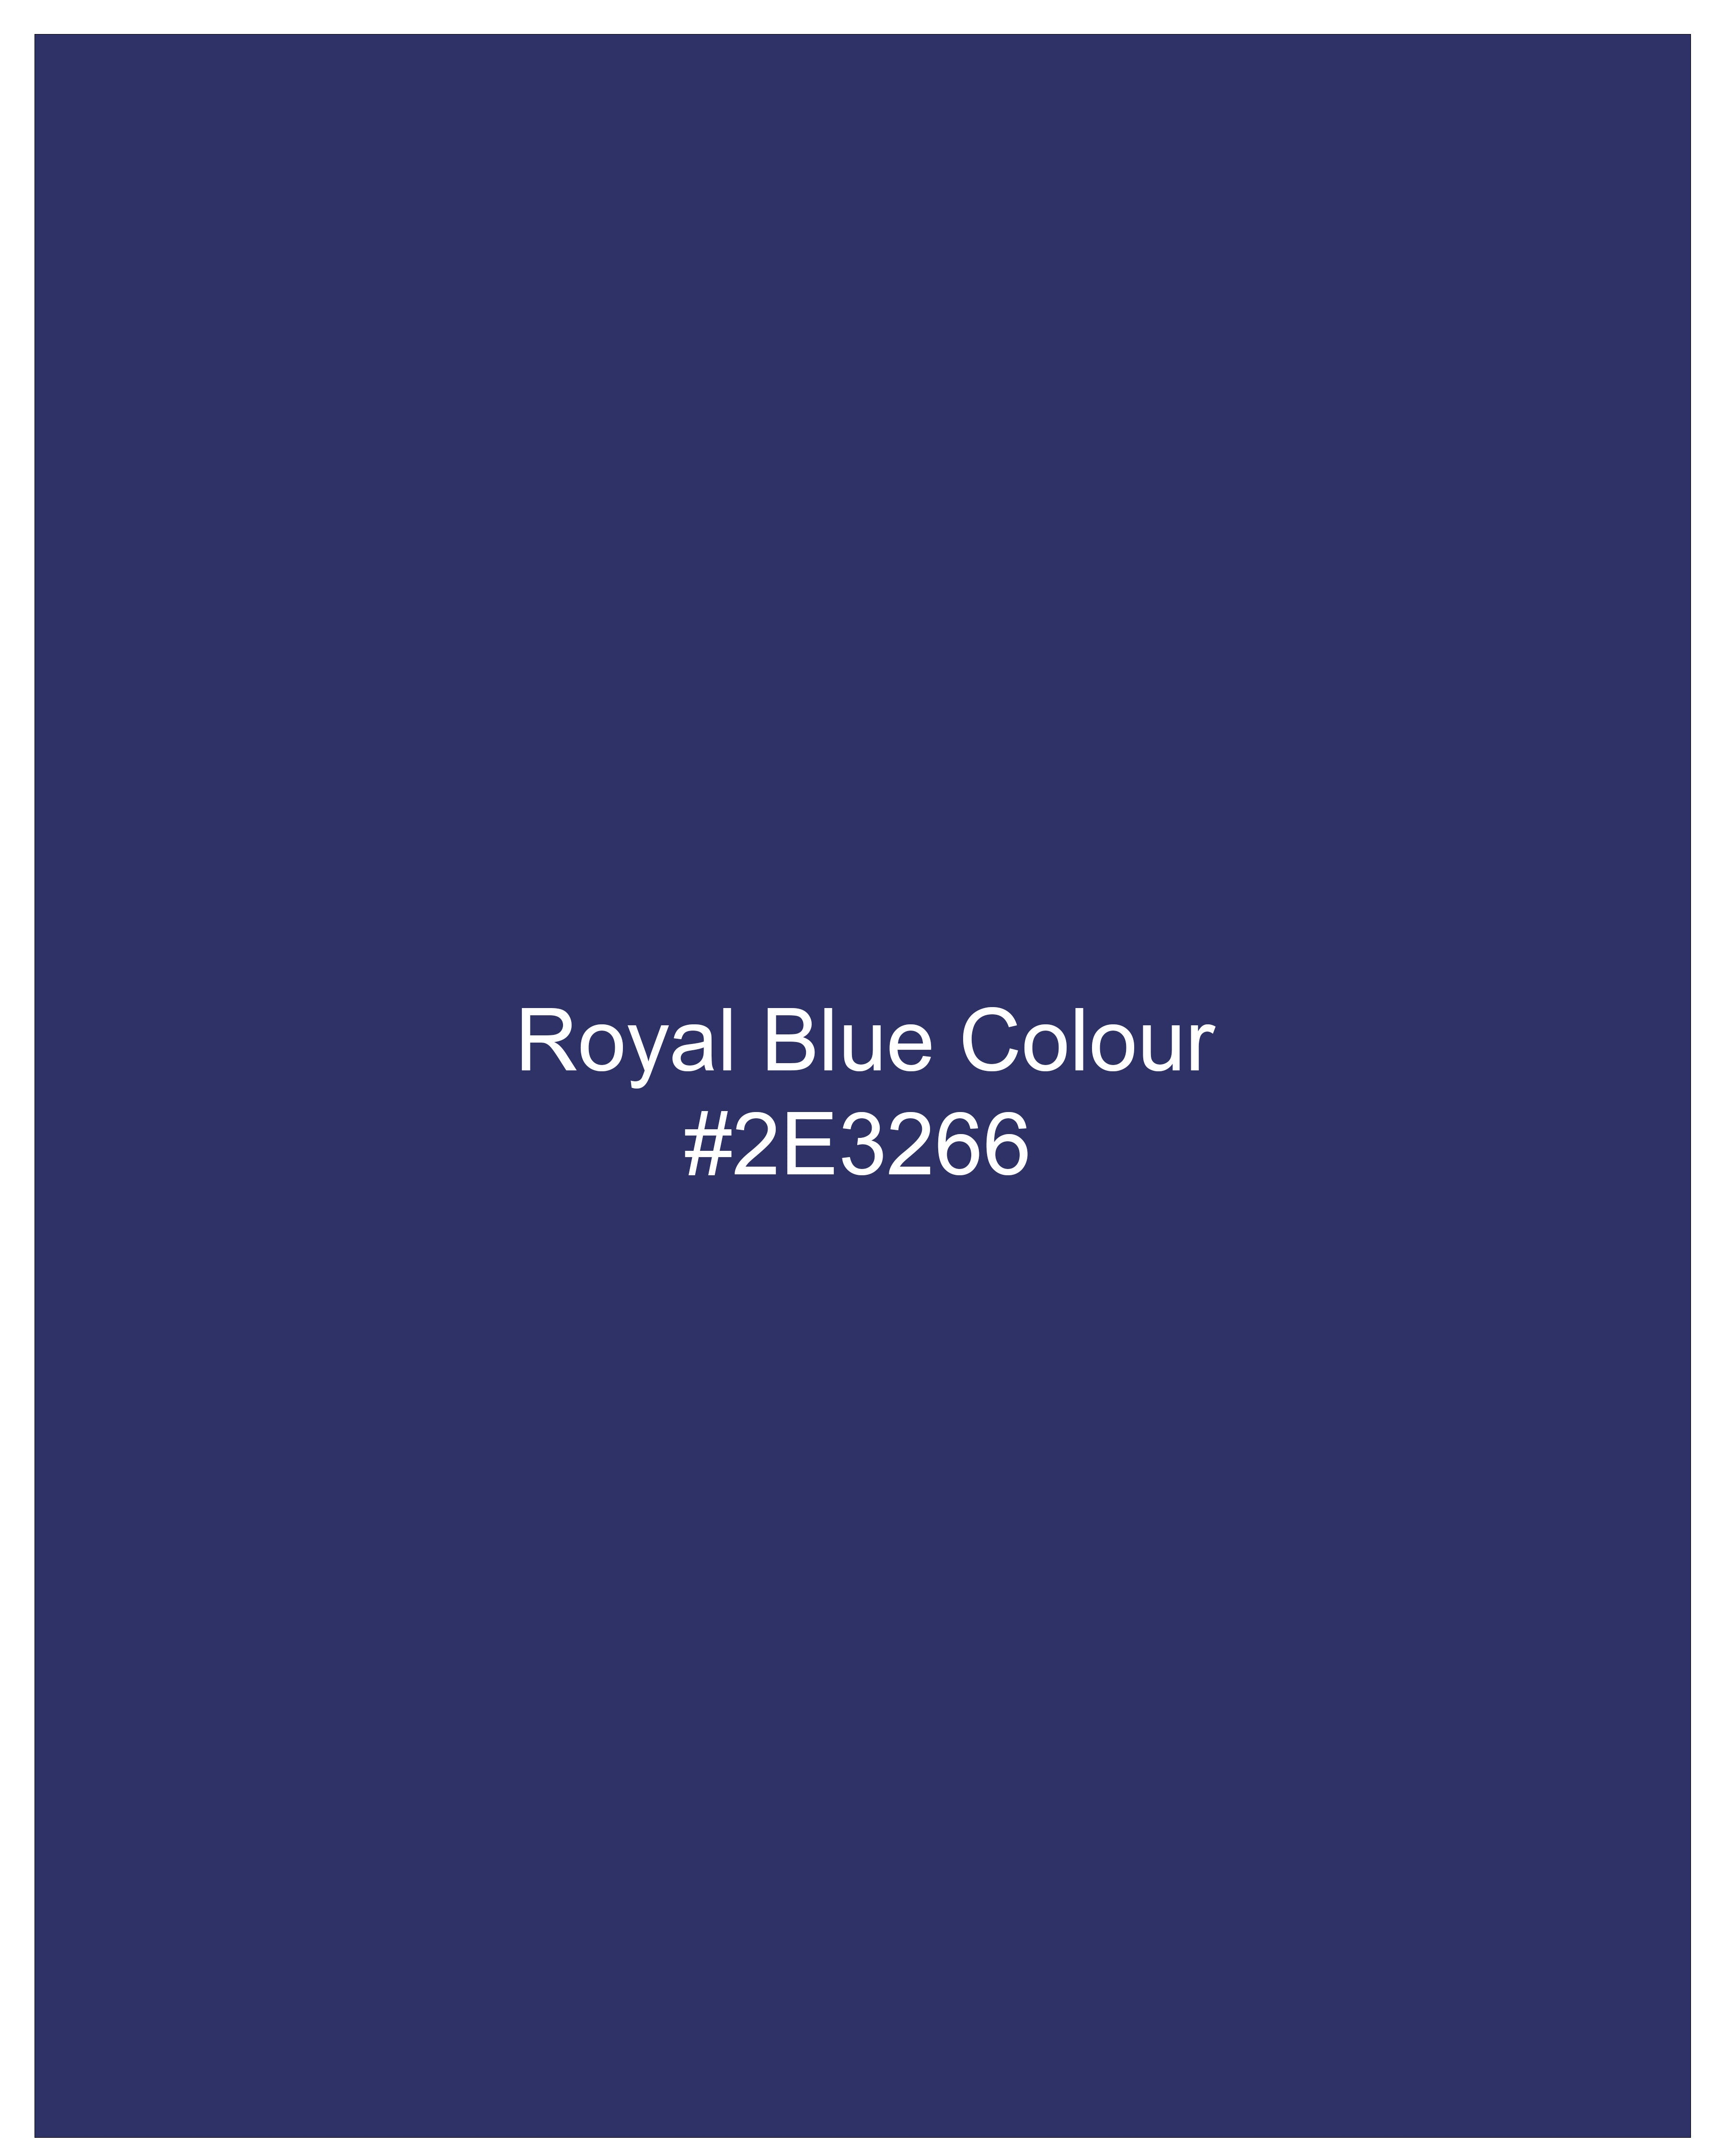 Royal Blue Tuxedo Suit ST2455-BKL-36, ST2455-BKL-38, ST2455-BKL-40, ST2455-BKL-42, ST2455-BKL-44, ST2455-BKL-46, ST2455-BKL-48, ST2455-BKL-50, ST2455-BKL-52, ST2455-BKL-54, ST2455-BKL-56, ST2455-BKL-58, ST2455-BKL-60